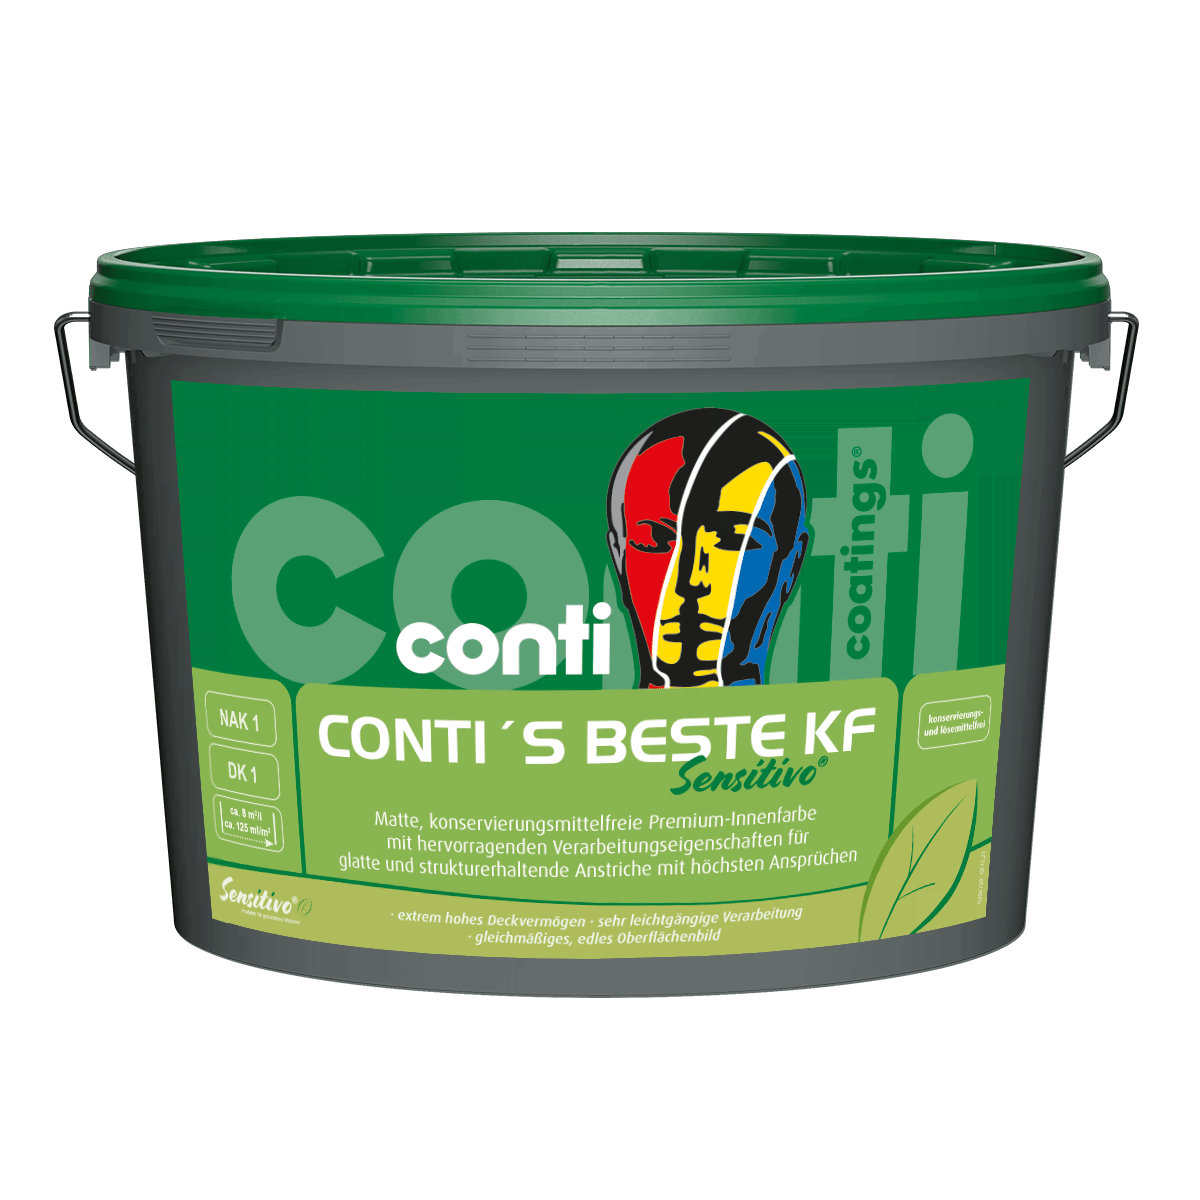 Conti's Beste KF Sensitivo von conti coatings